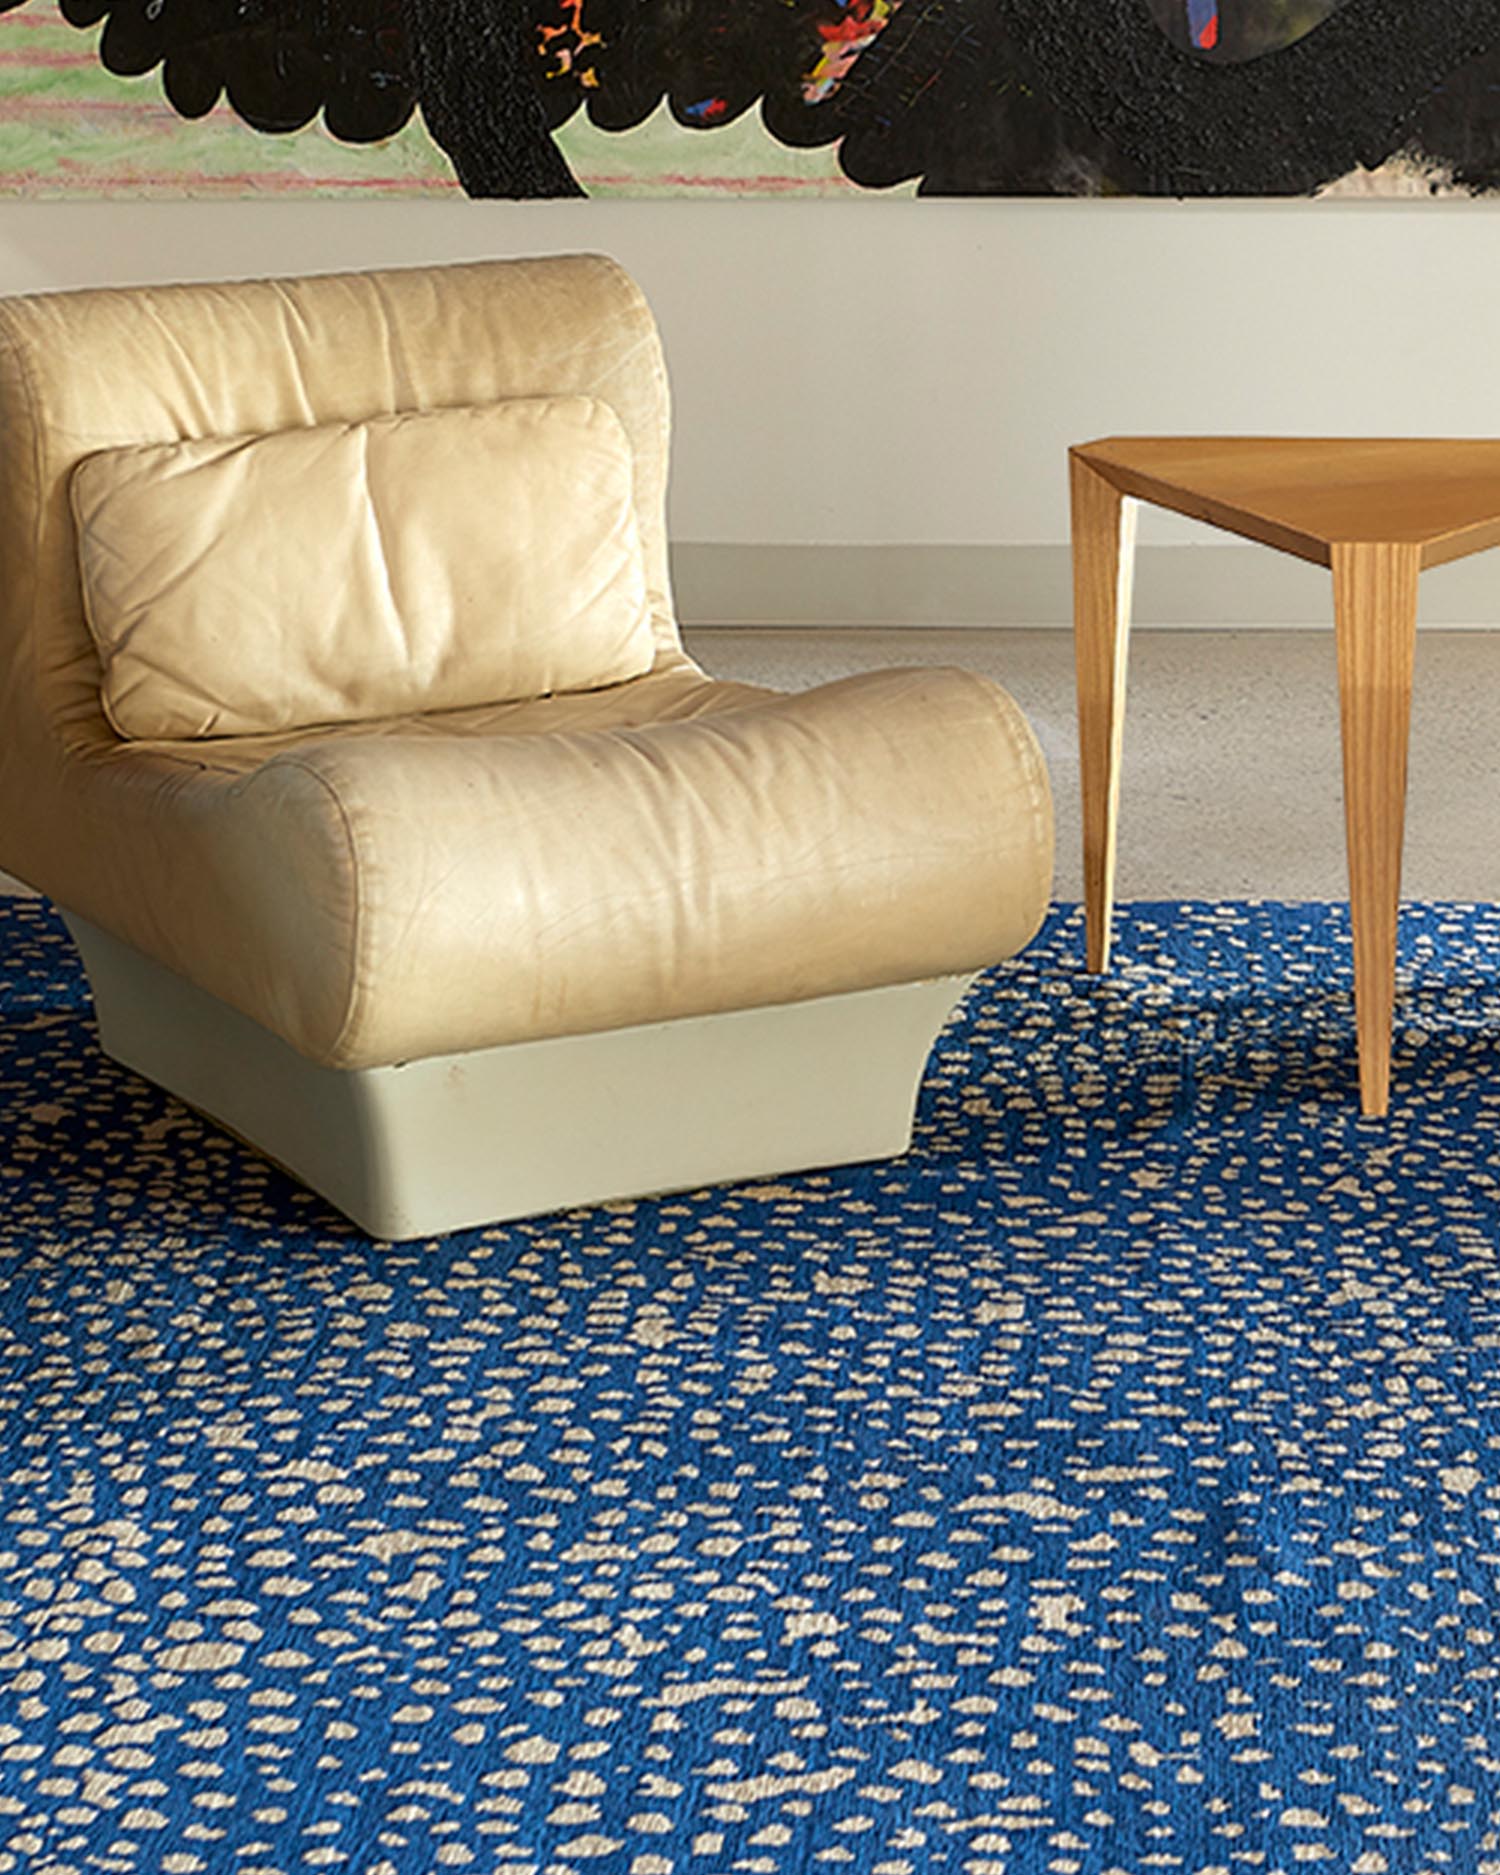 angela adams Starry Sapphire rug contemporary modern